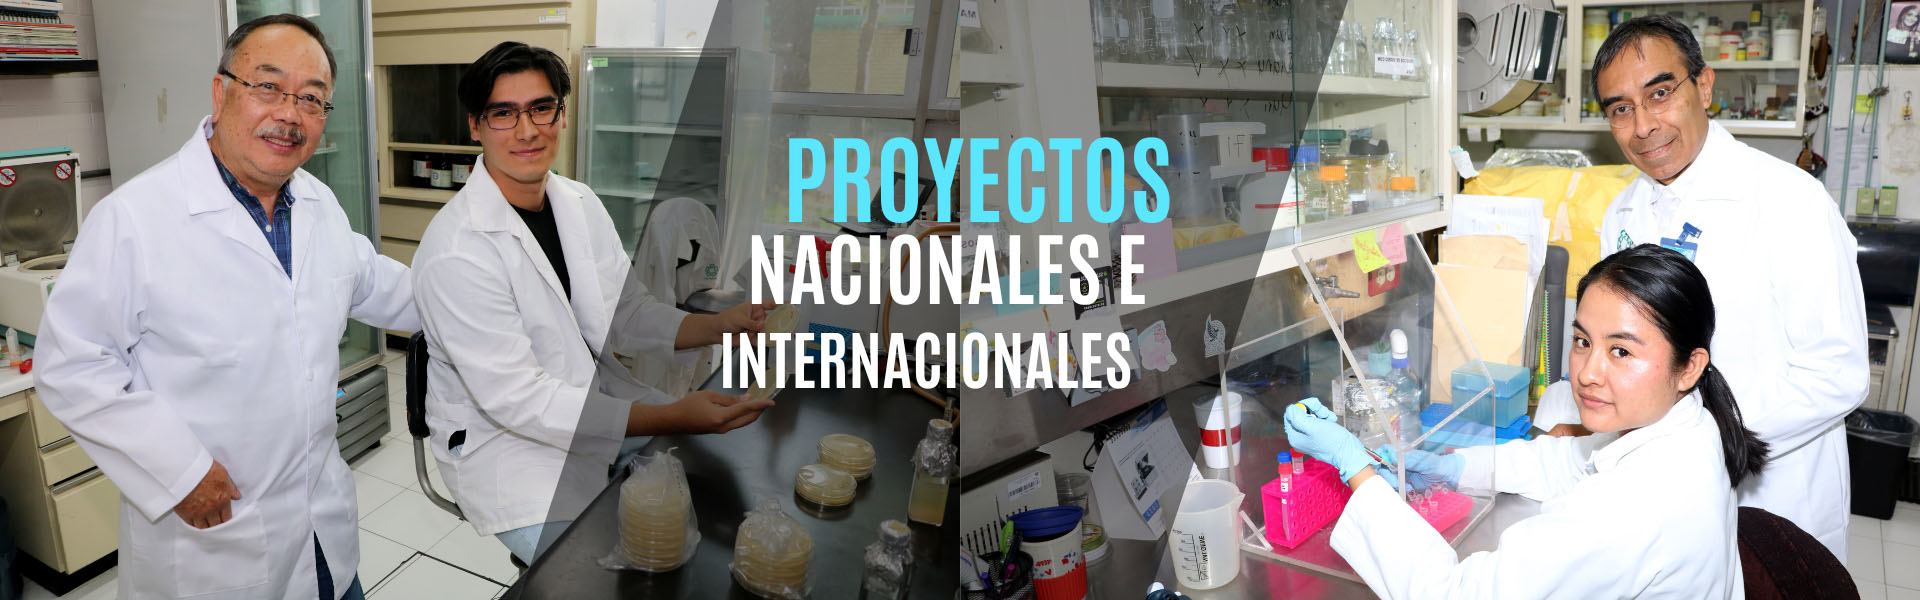 Banner Proyectos